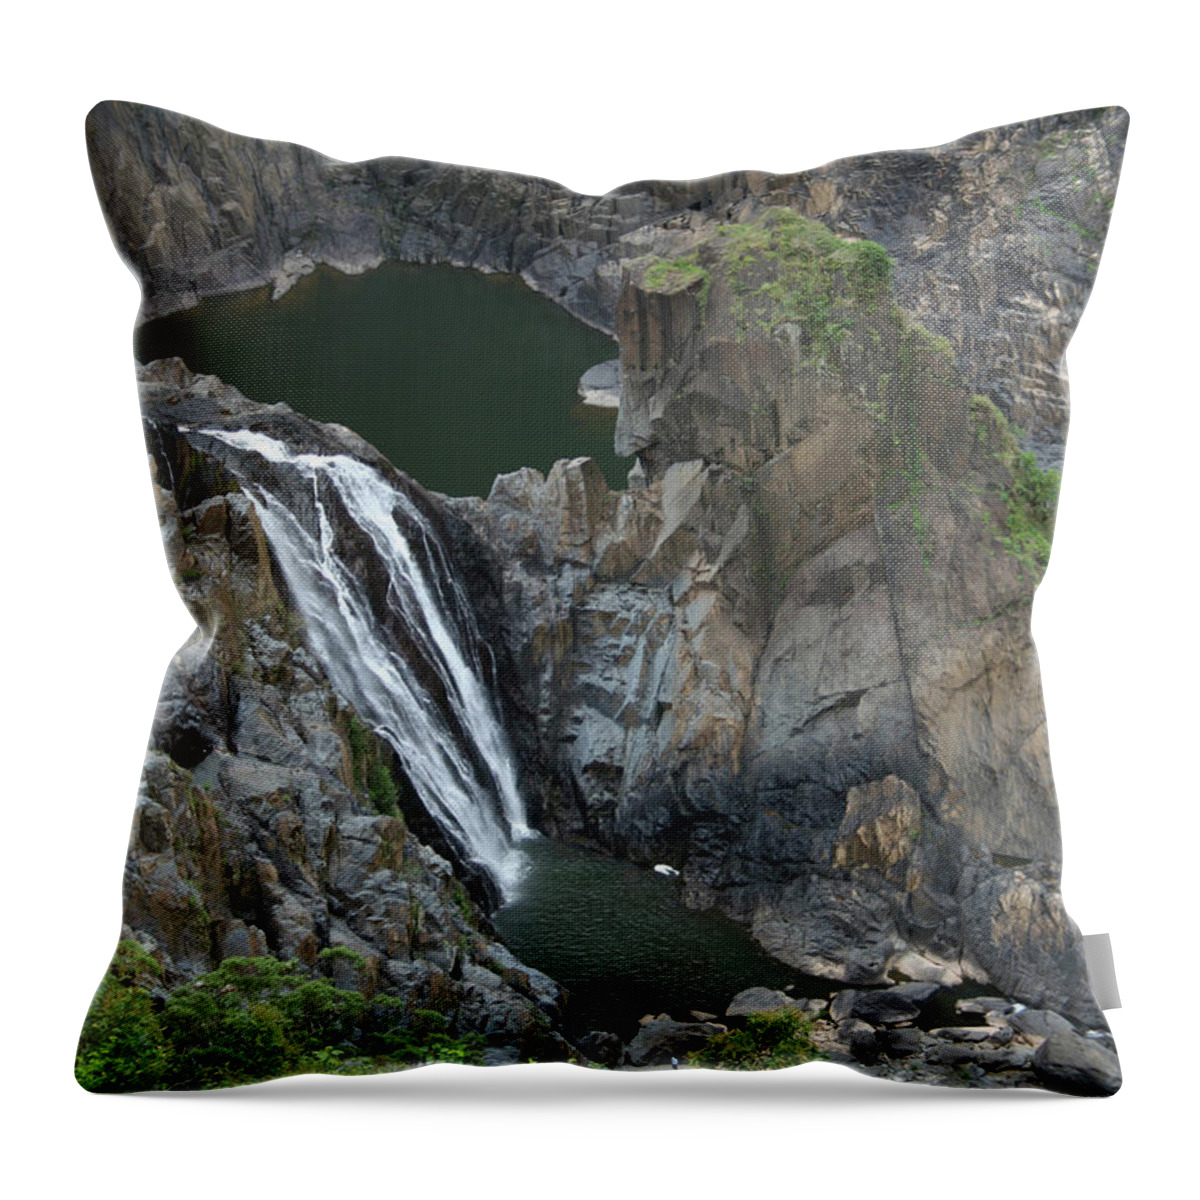 Barron Falls Throw Pillow featuring the photograph Barron Falls by Maryse Jansen